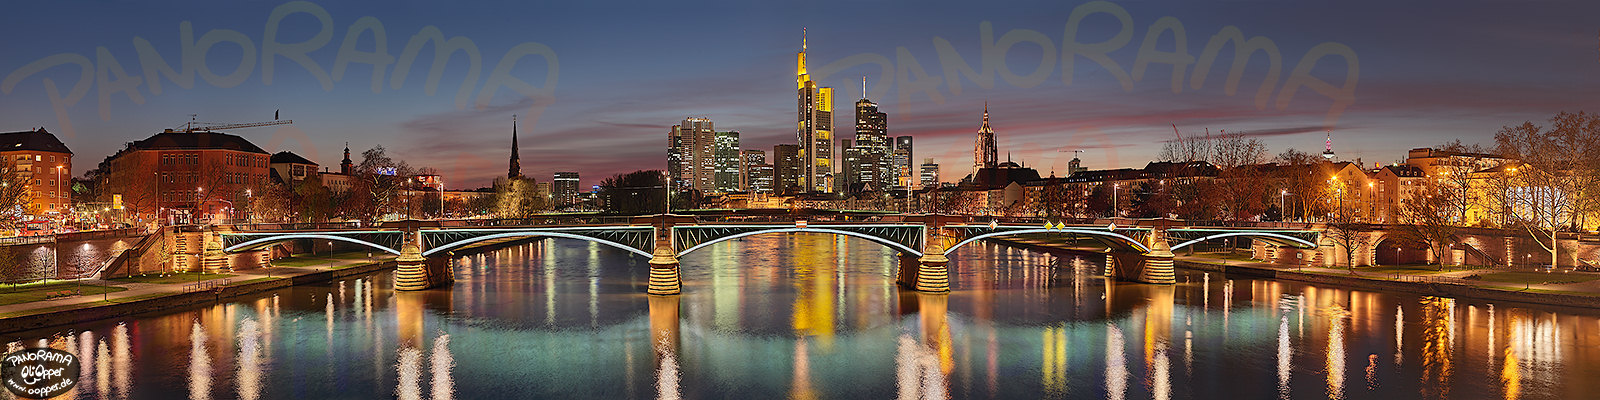 Skyline Frankfurt - p322 - (c) by Oliver Opper